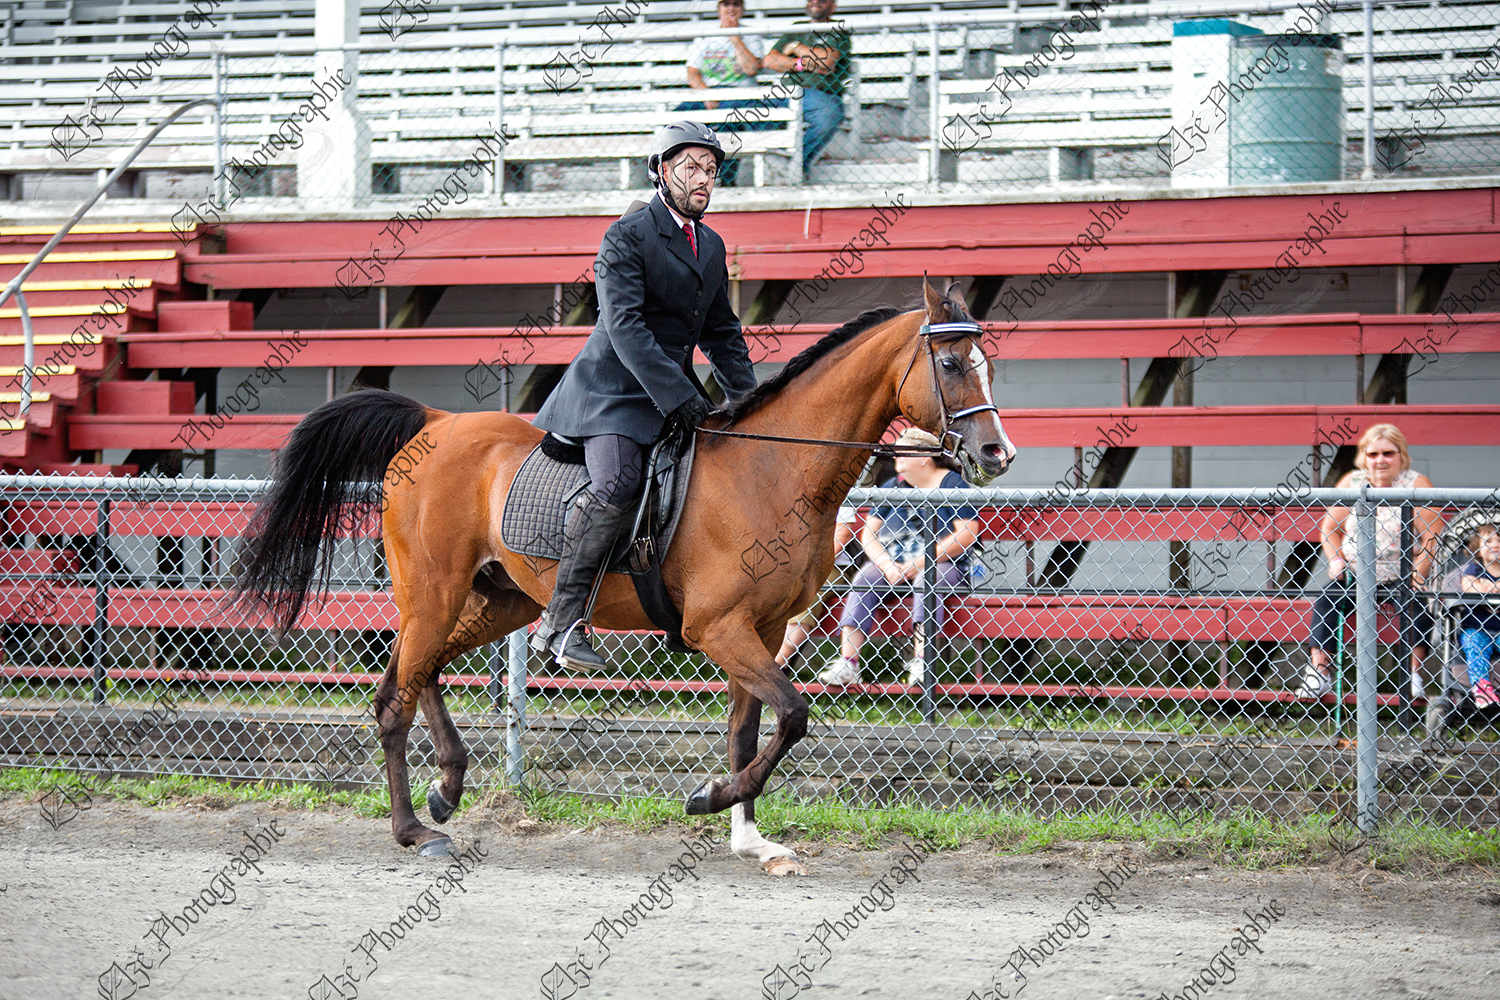 elze_photo_5582_bridon_competition_chevaux_classical_rider_arabian_horse